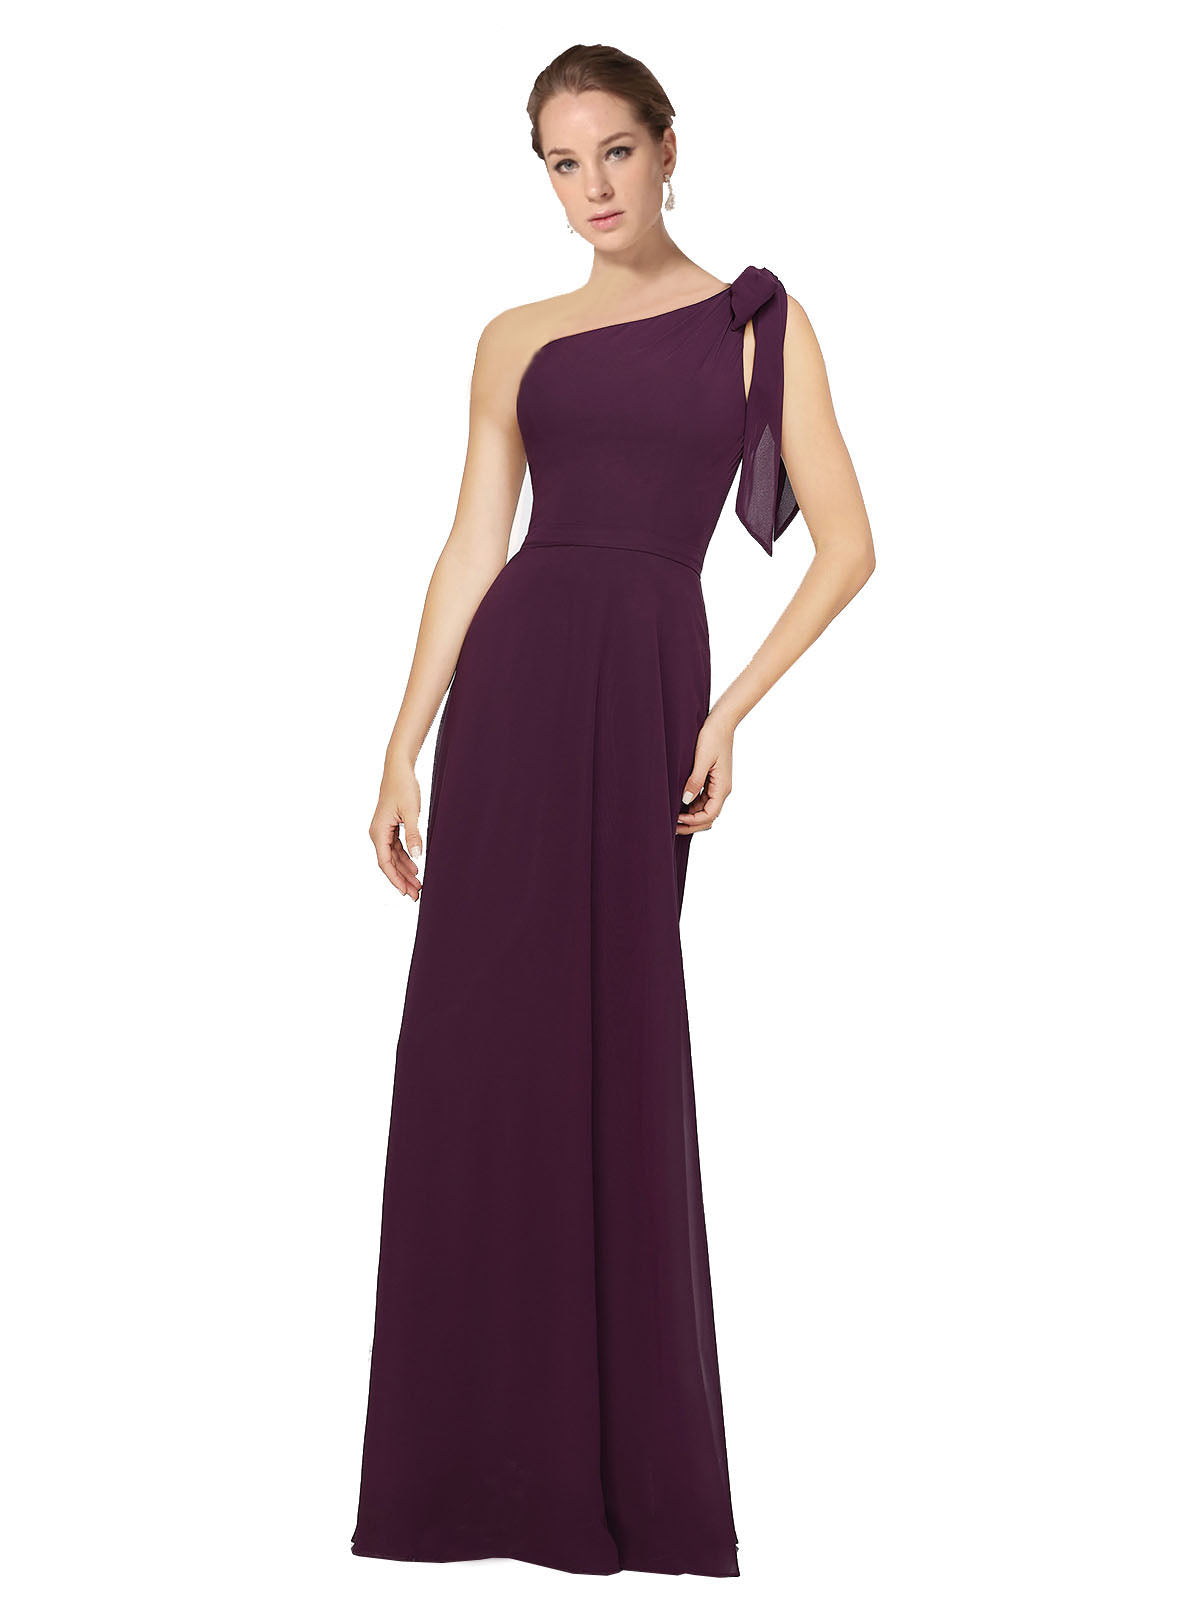 Shop A-Line One Shoulder Floor Length One Shoulder Long Grape Bridesmaid Dresses Rose